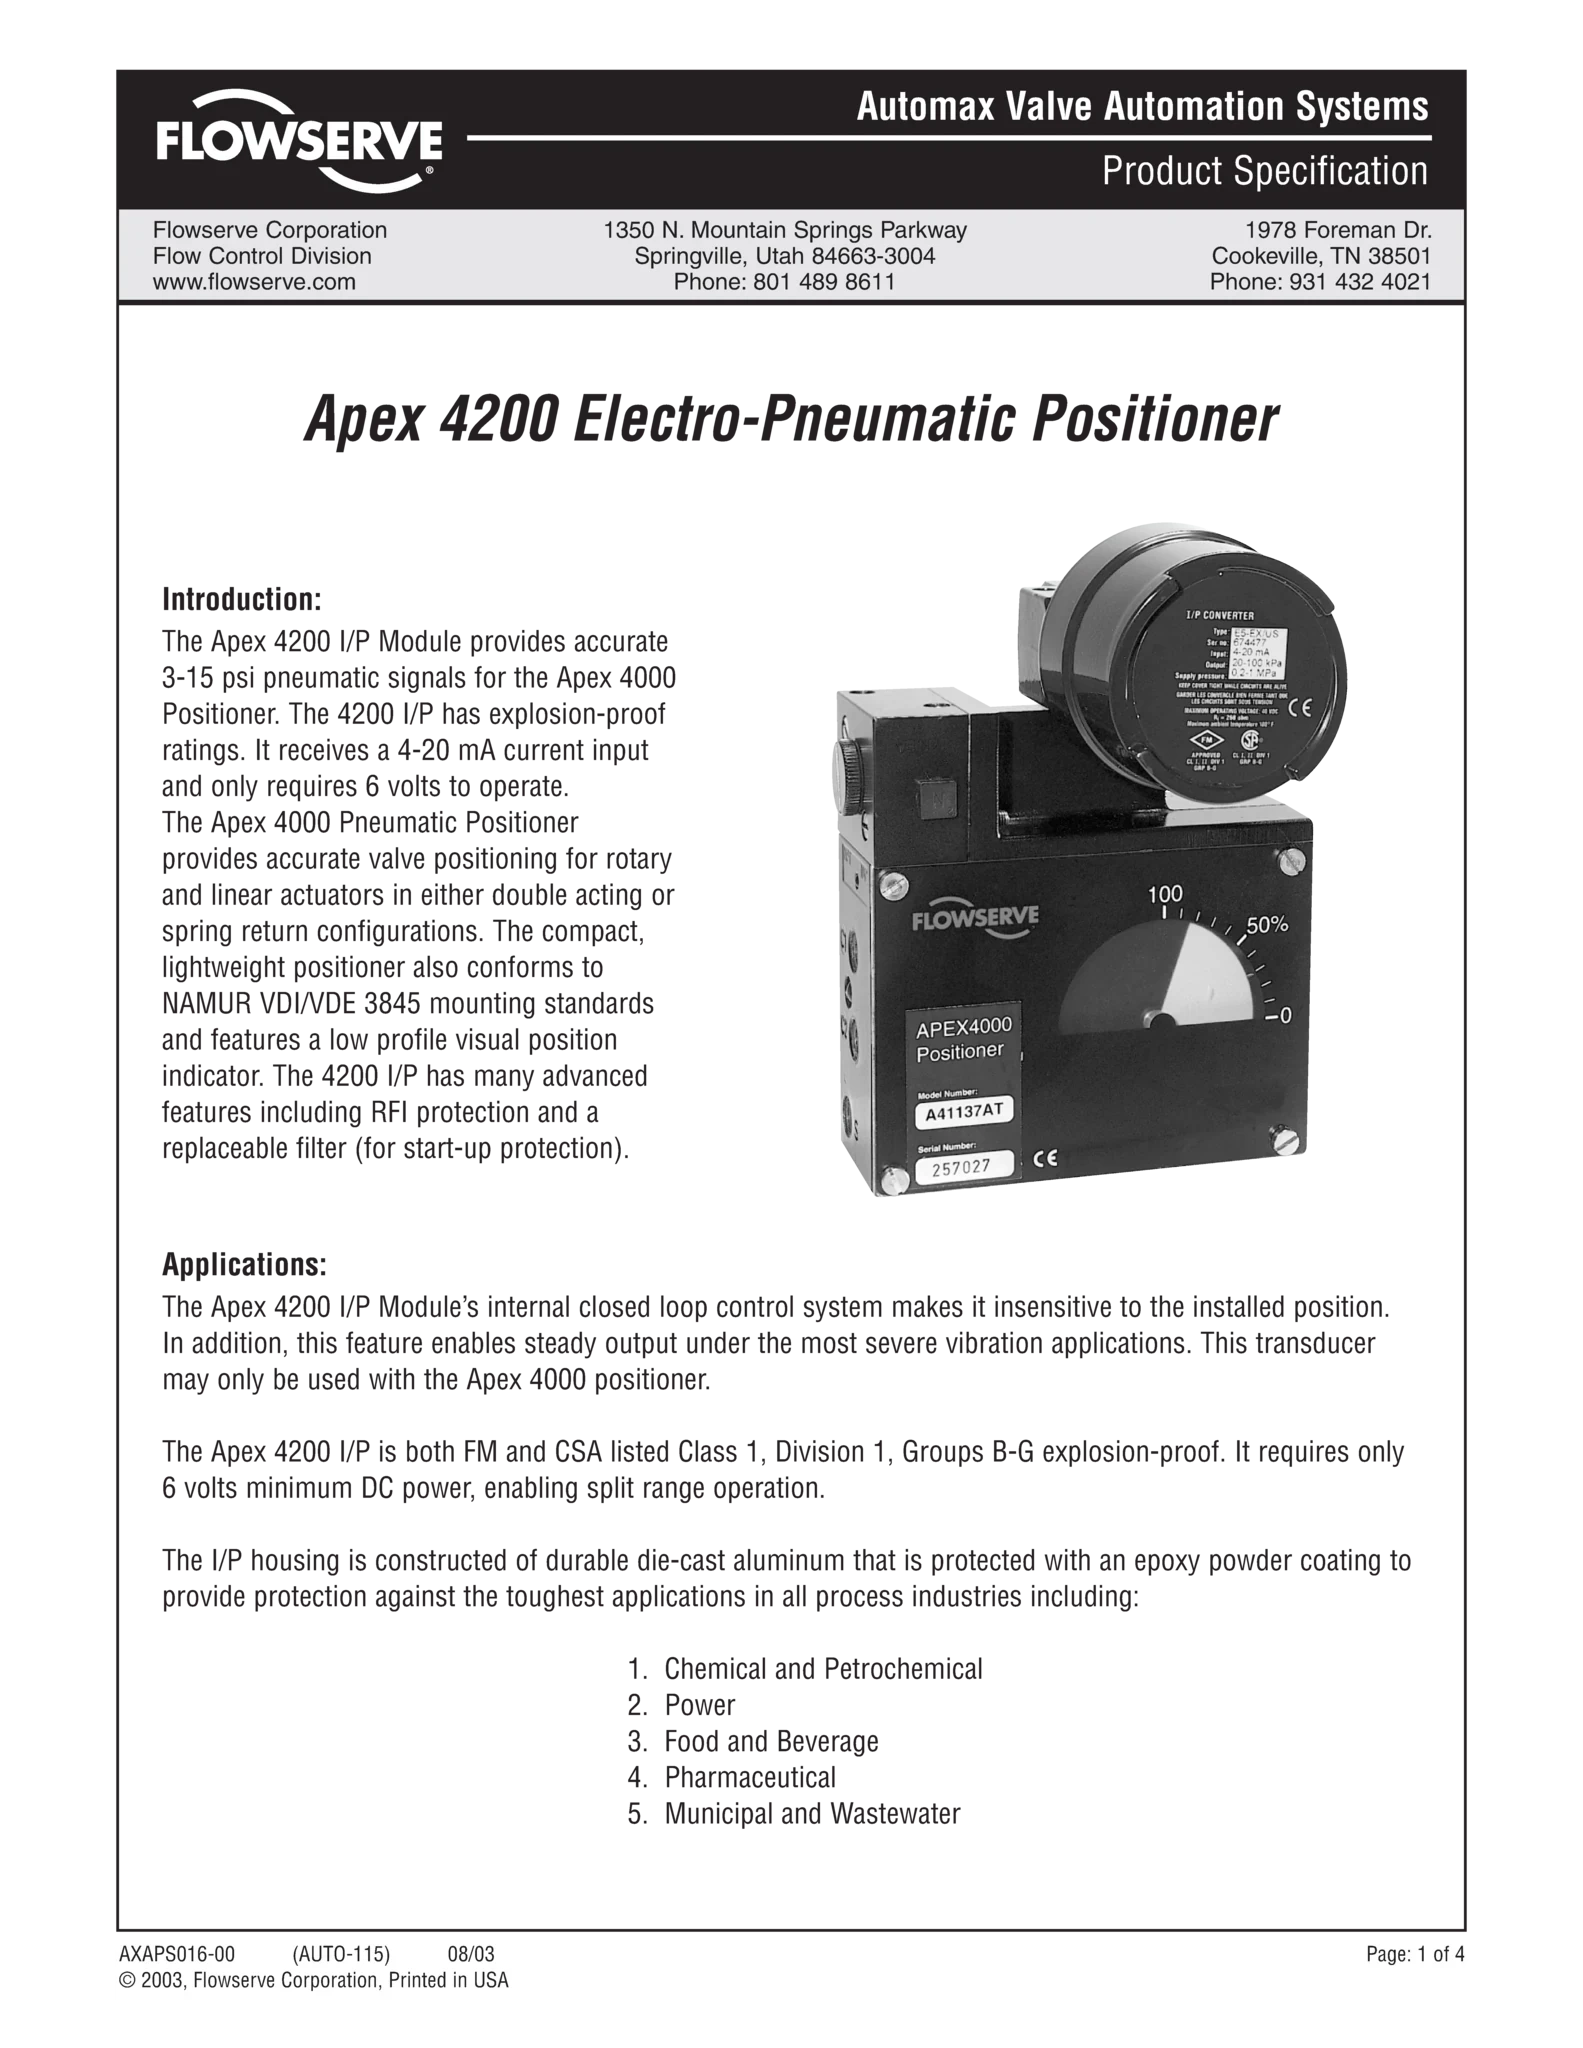 Automax APEX 4200电动气动定位器产品规格